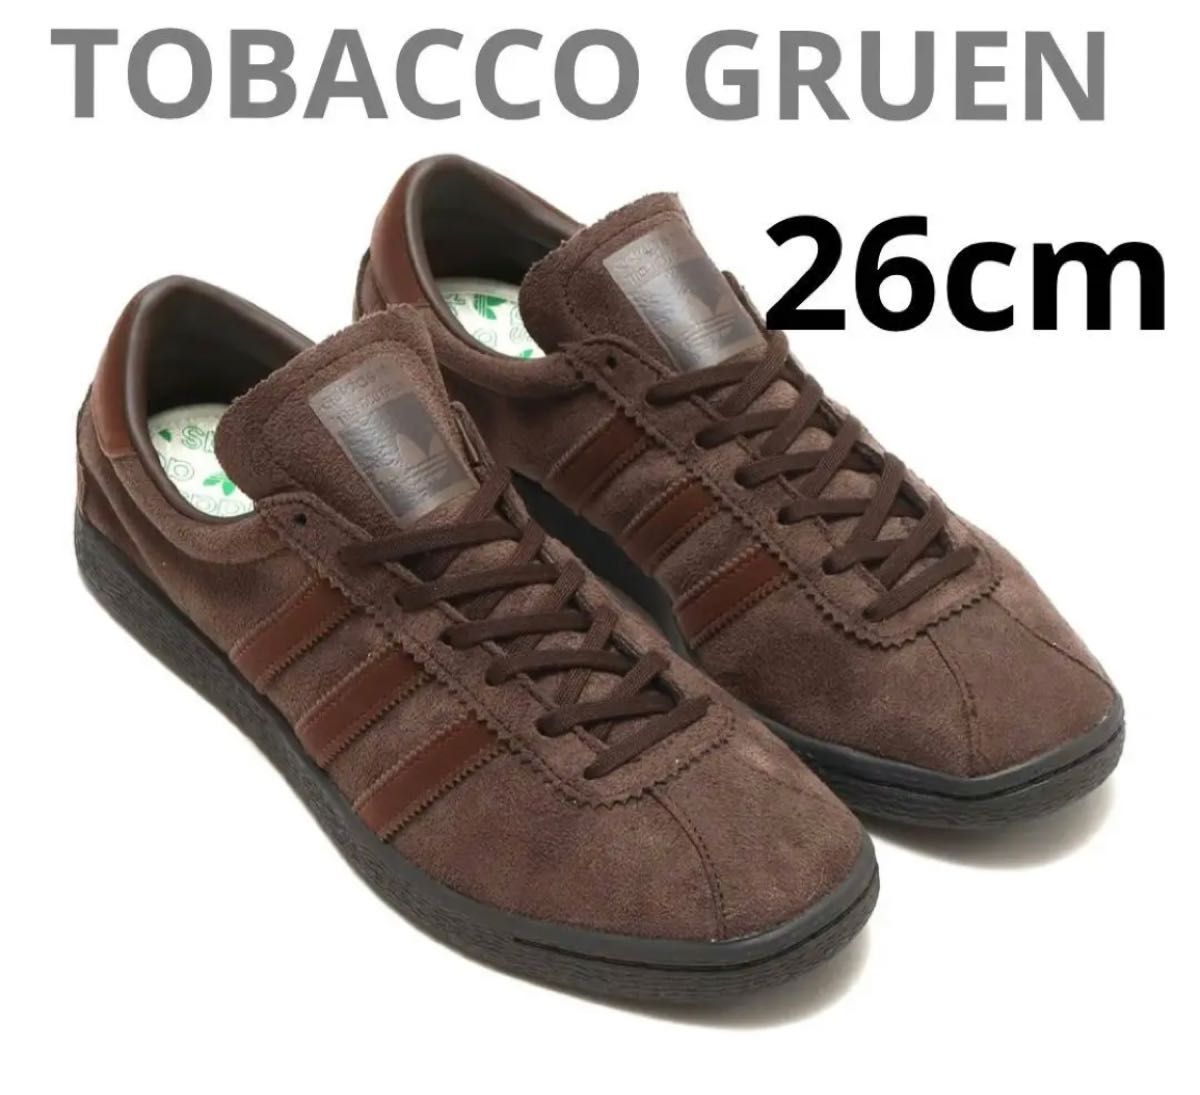 27.5㎝ adidas tobacco GRUEN BROWN タバコ | myglobaltax.com